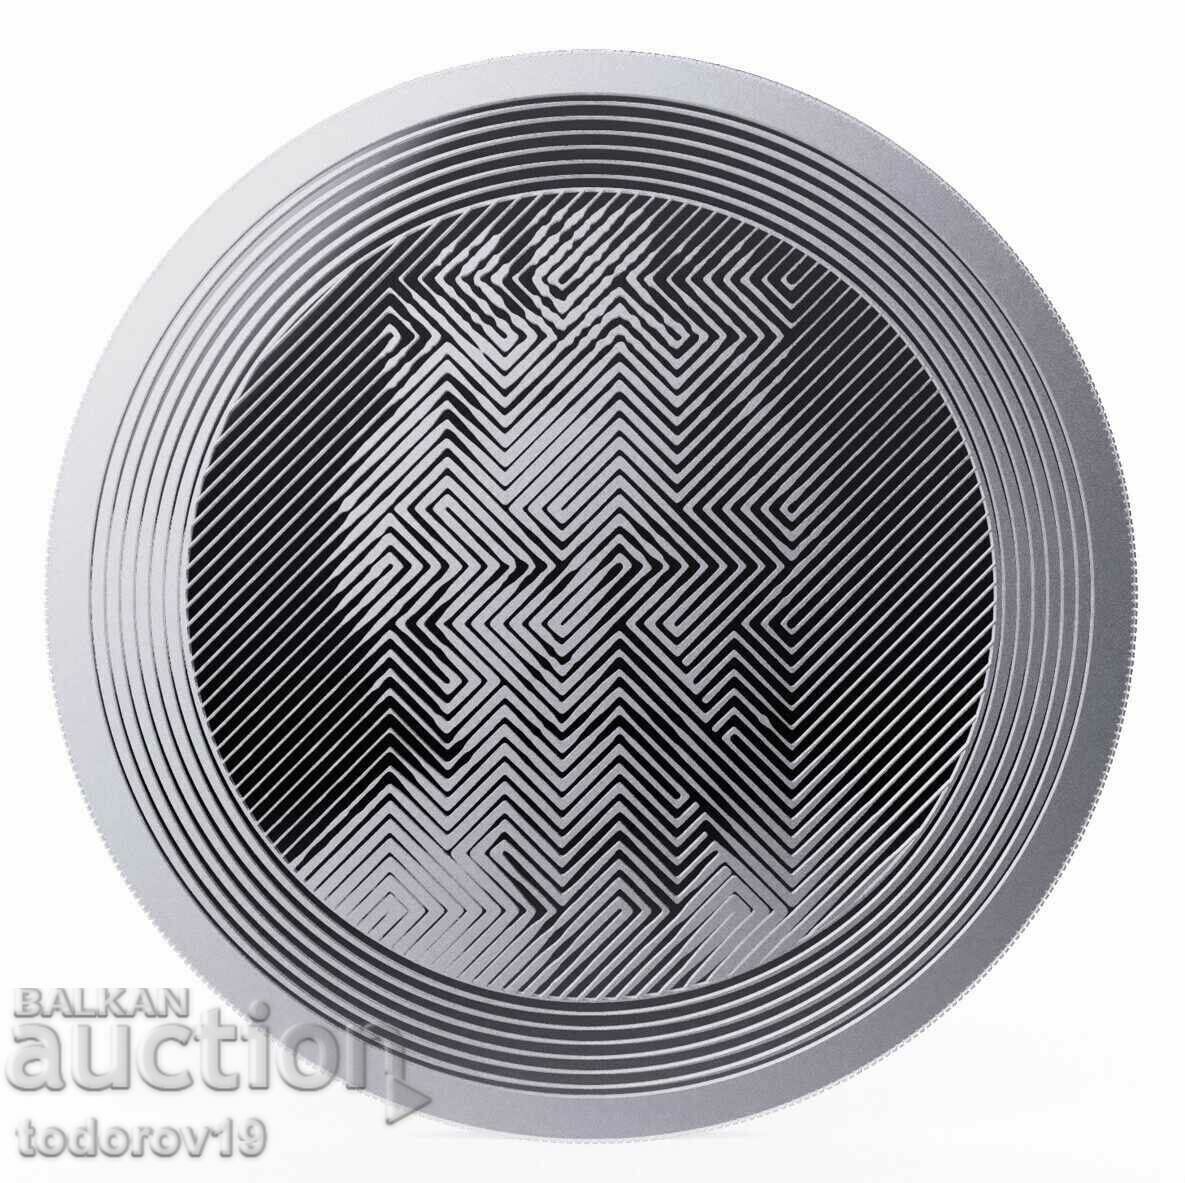 Icoane de 1 oz de argint ale inspirației Regina Elisabeta a II-a